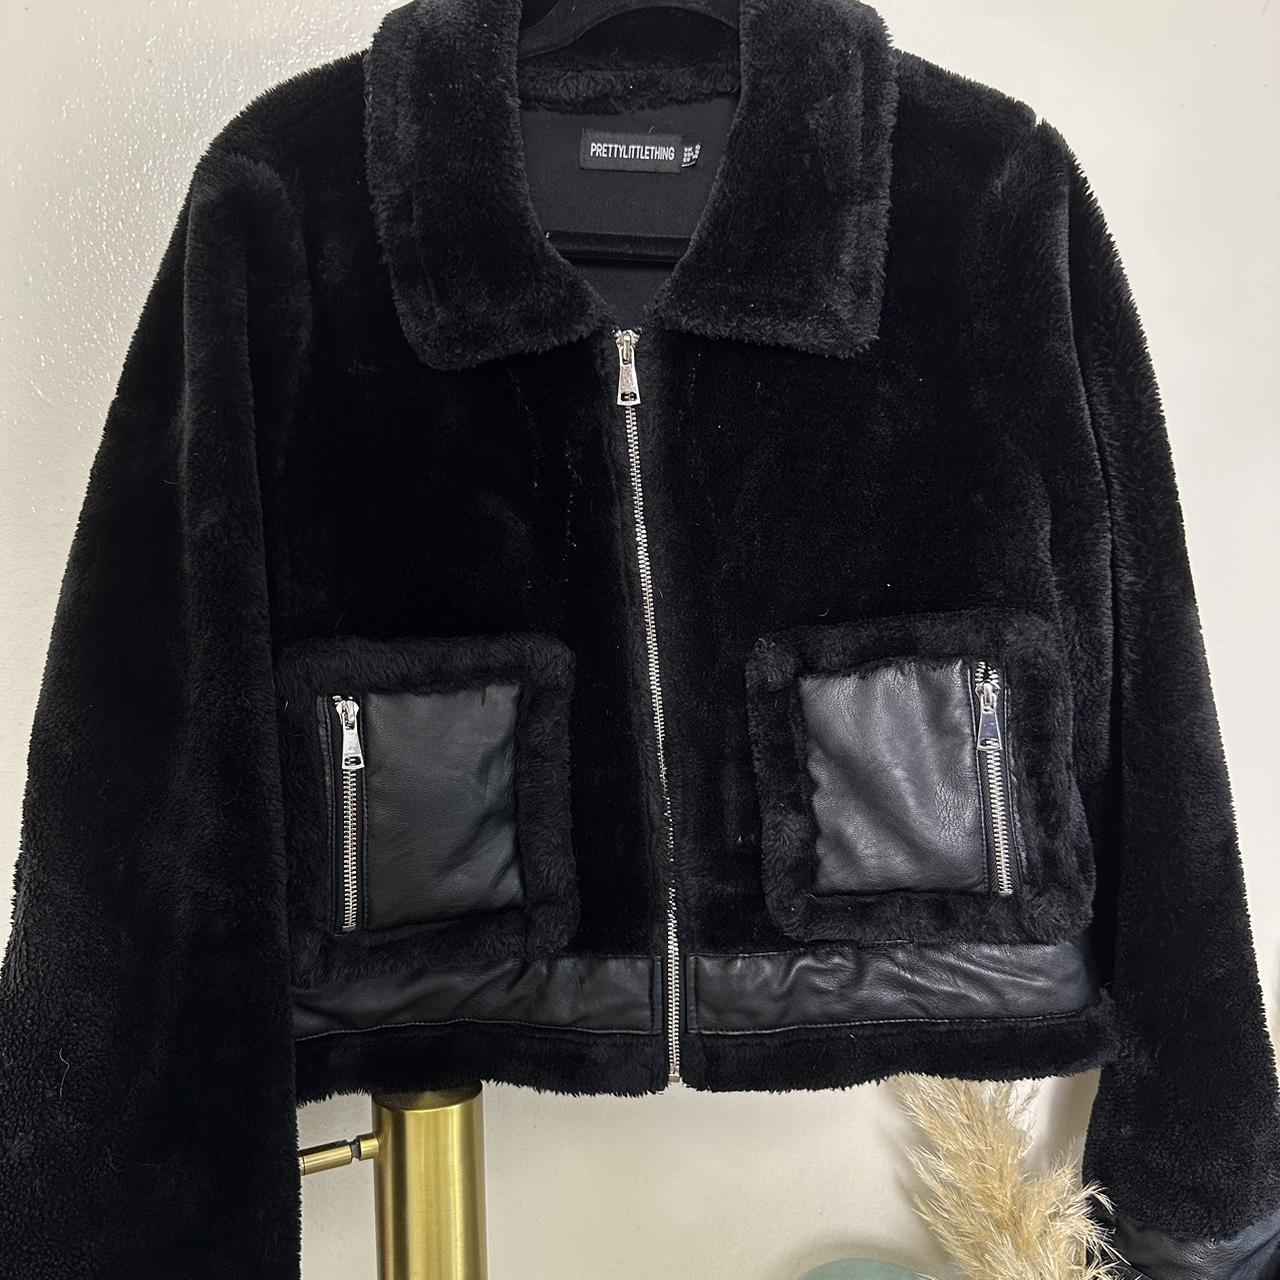 PLT Fuzzy Black Coat with leather detailing. Super... - Depop